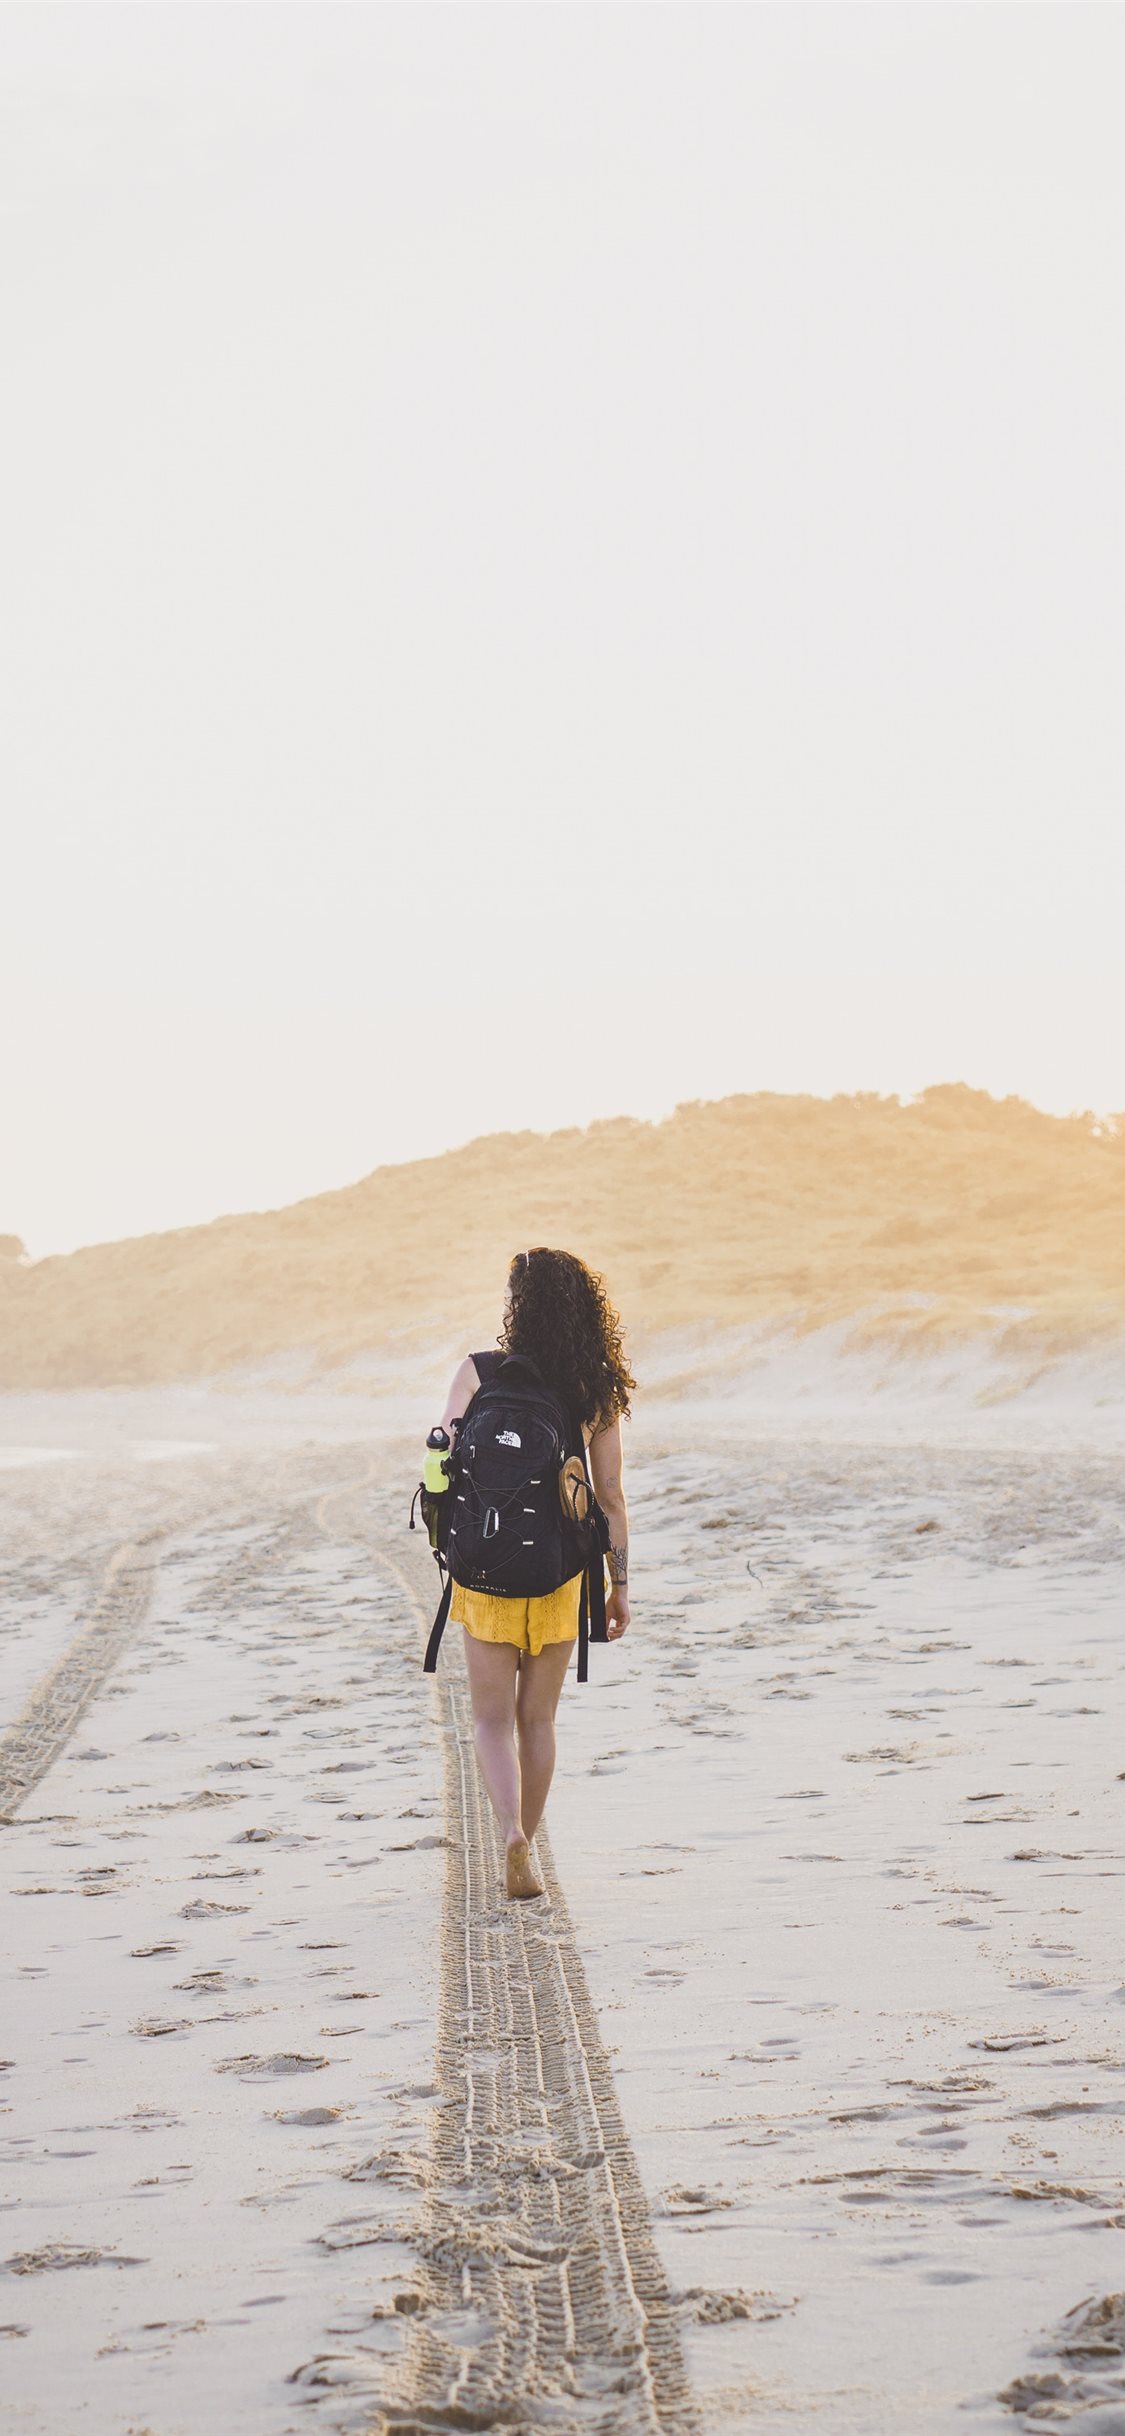 Sunset Beach Girl Walking Australia Day Iphone X Wallpapers Free Download